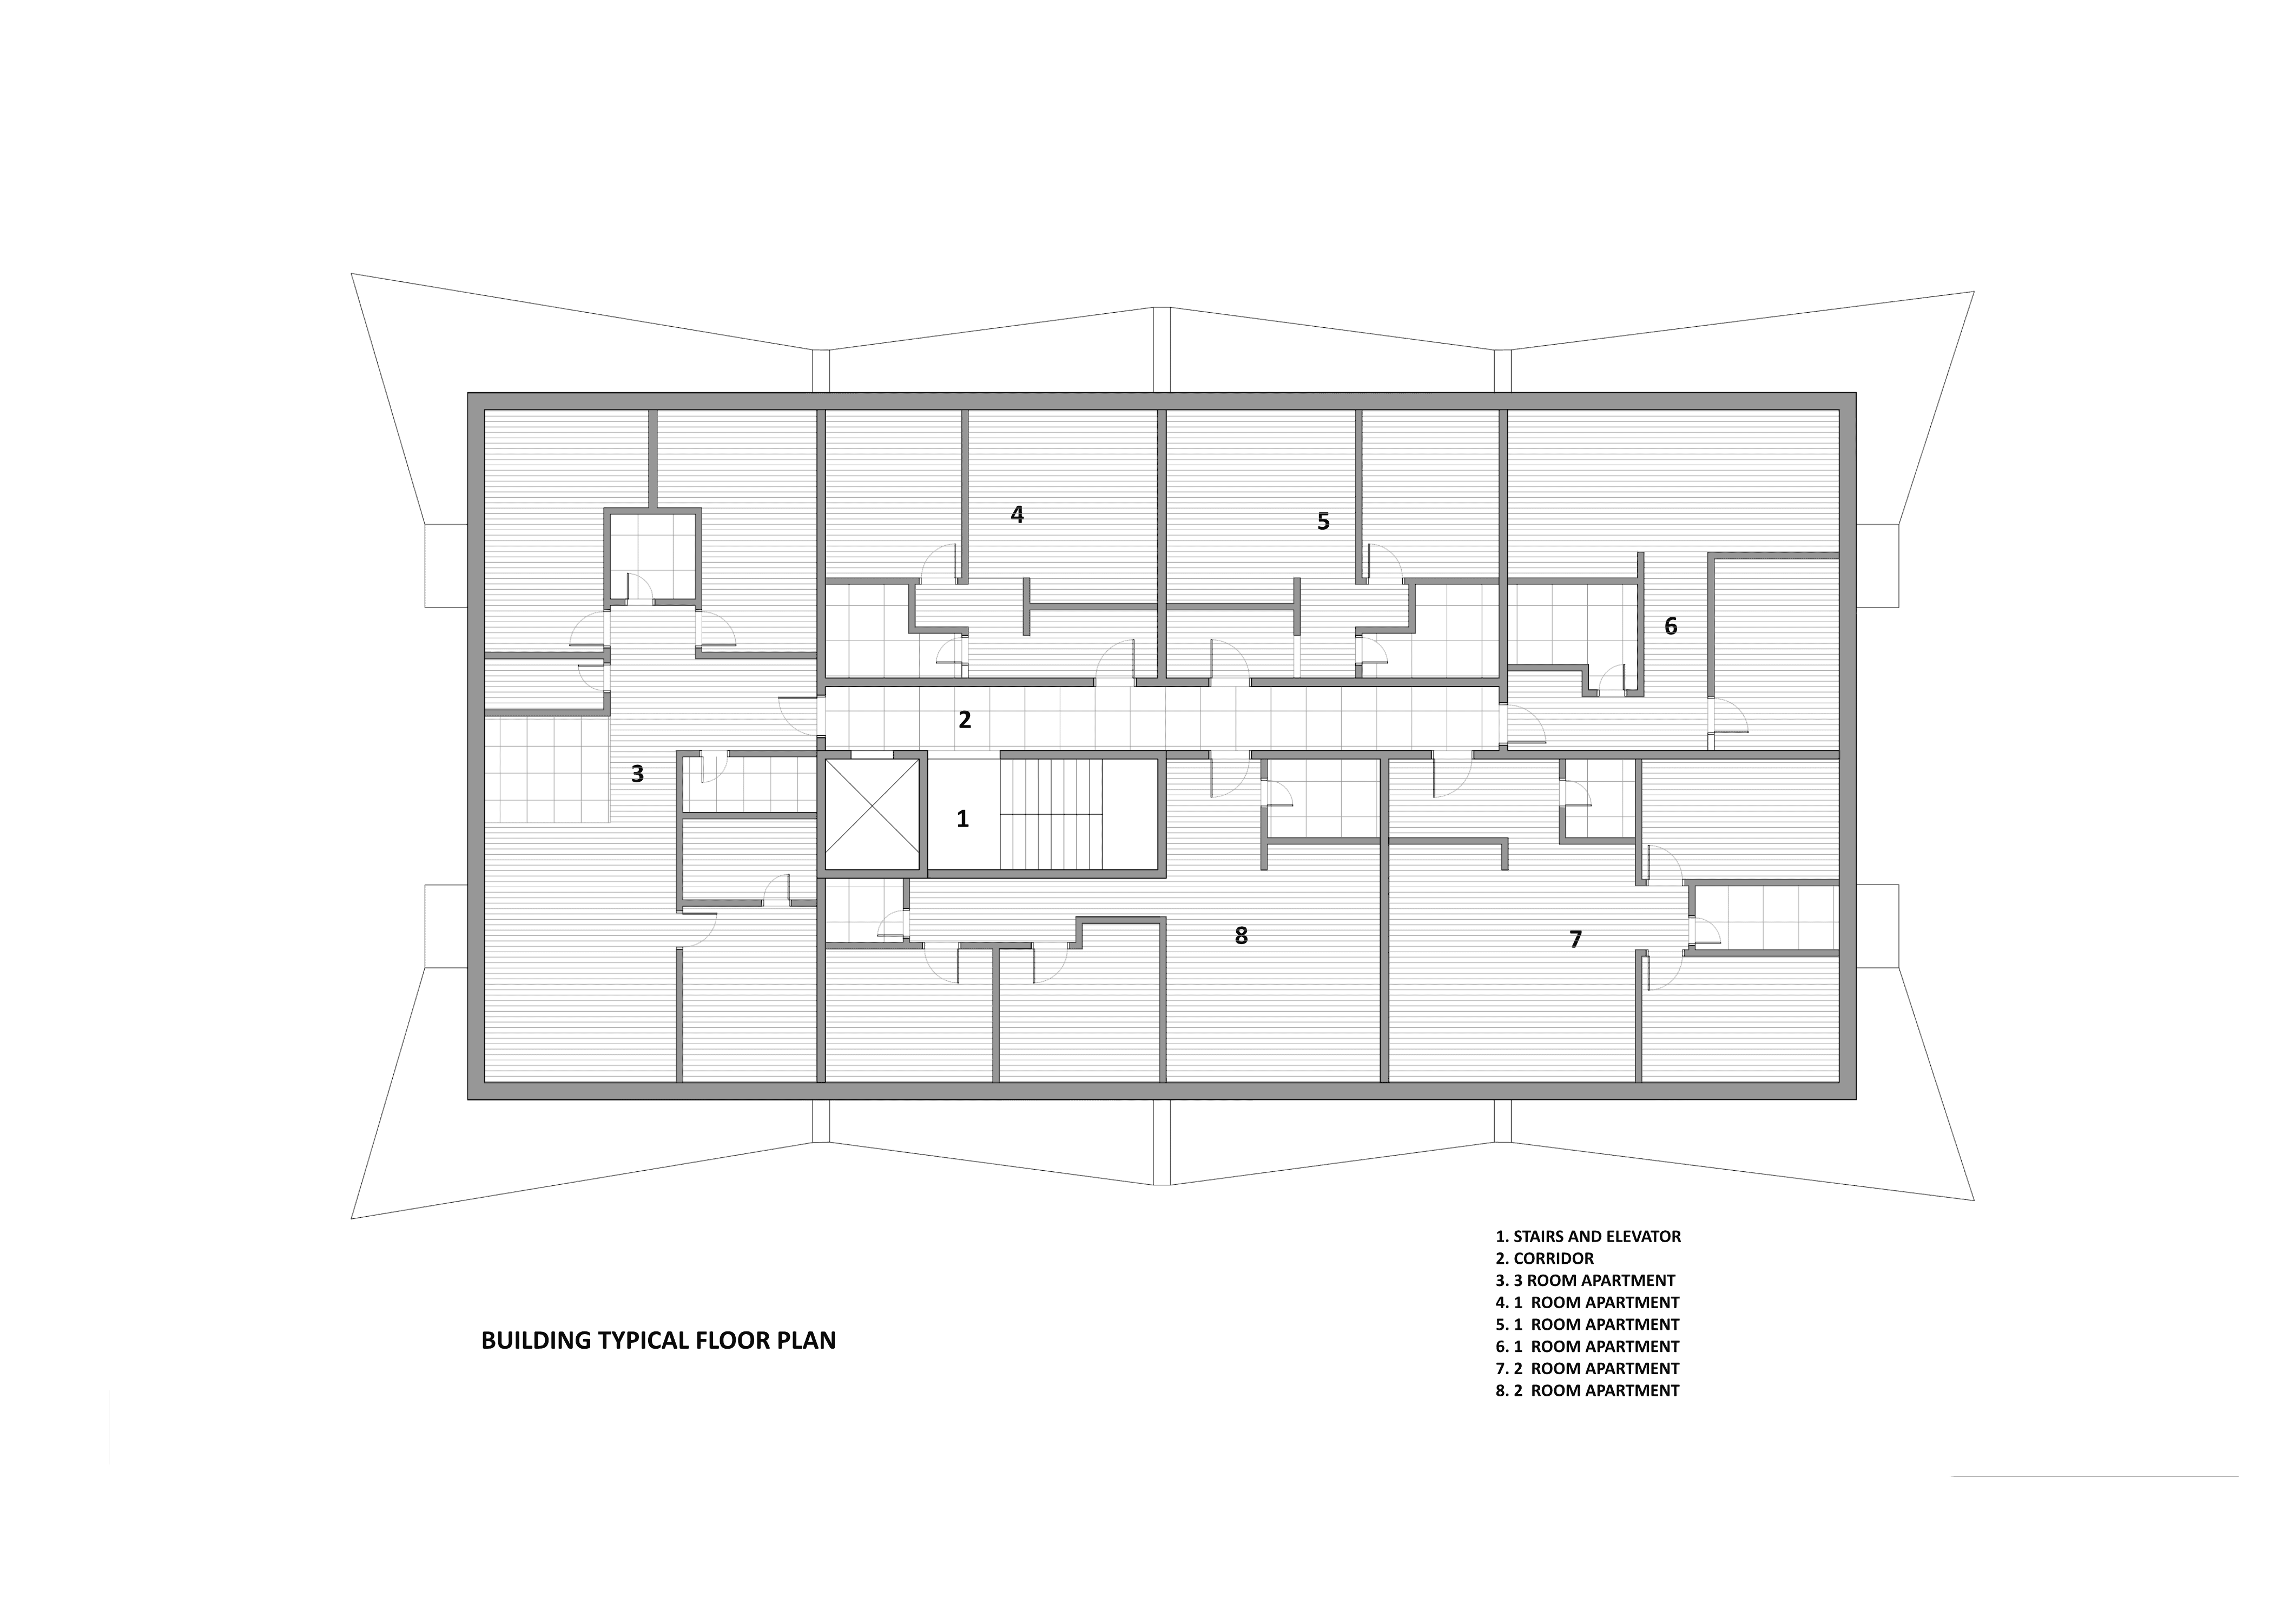 mladenovac-building-typical-floor-plan